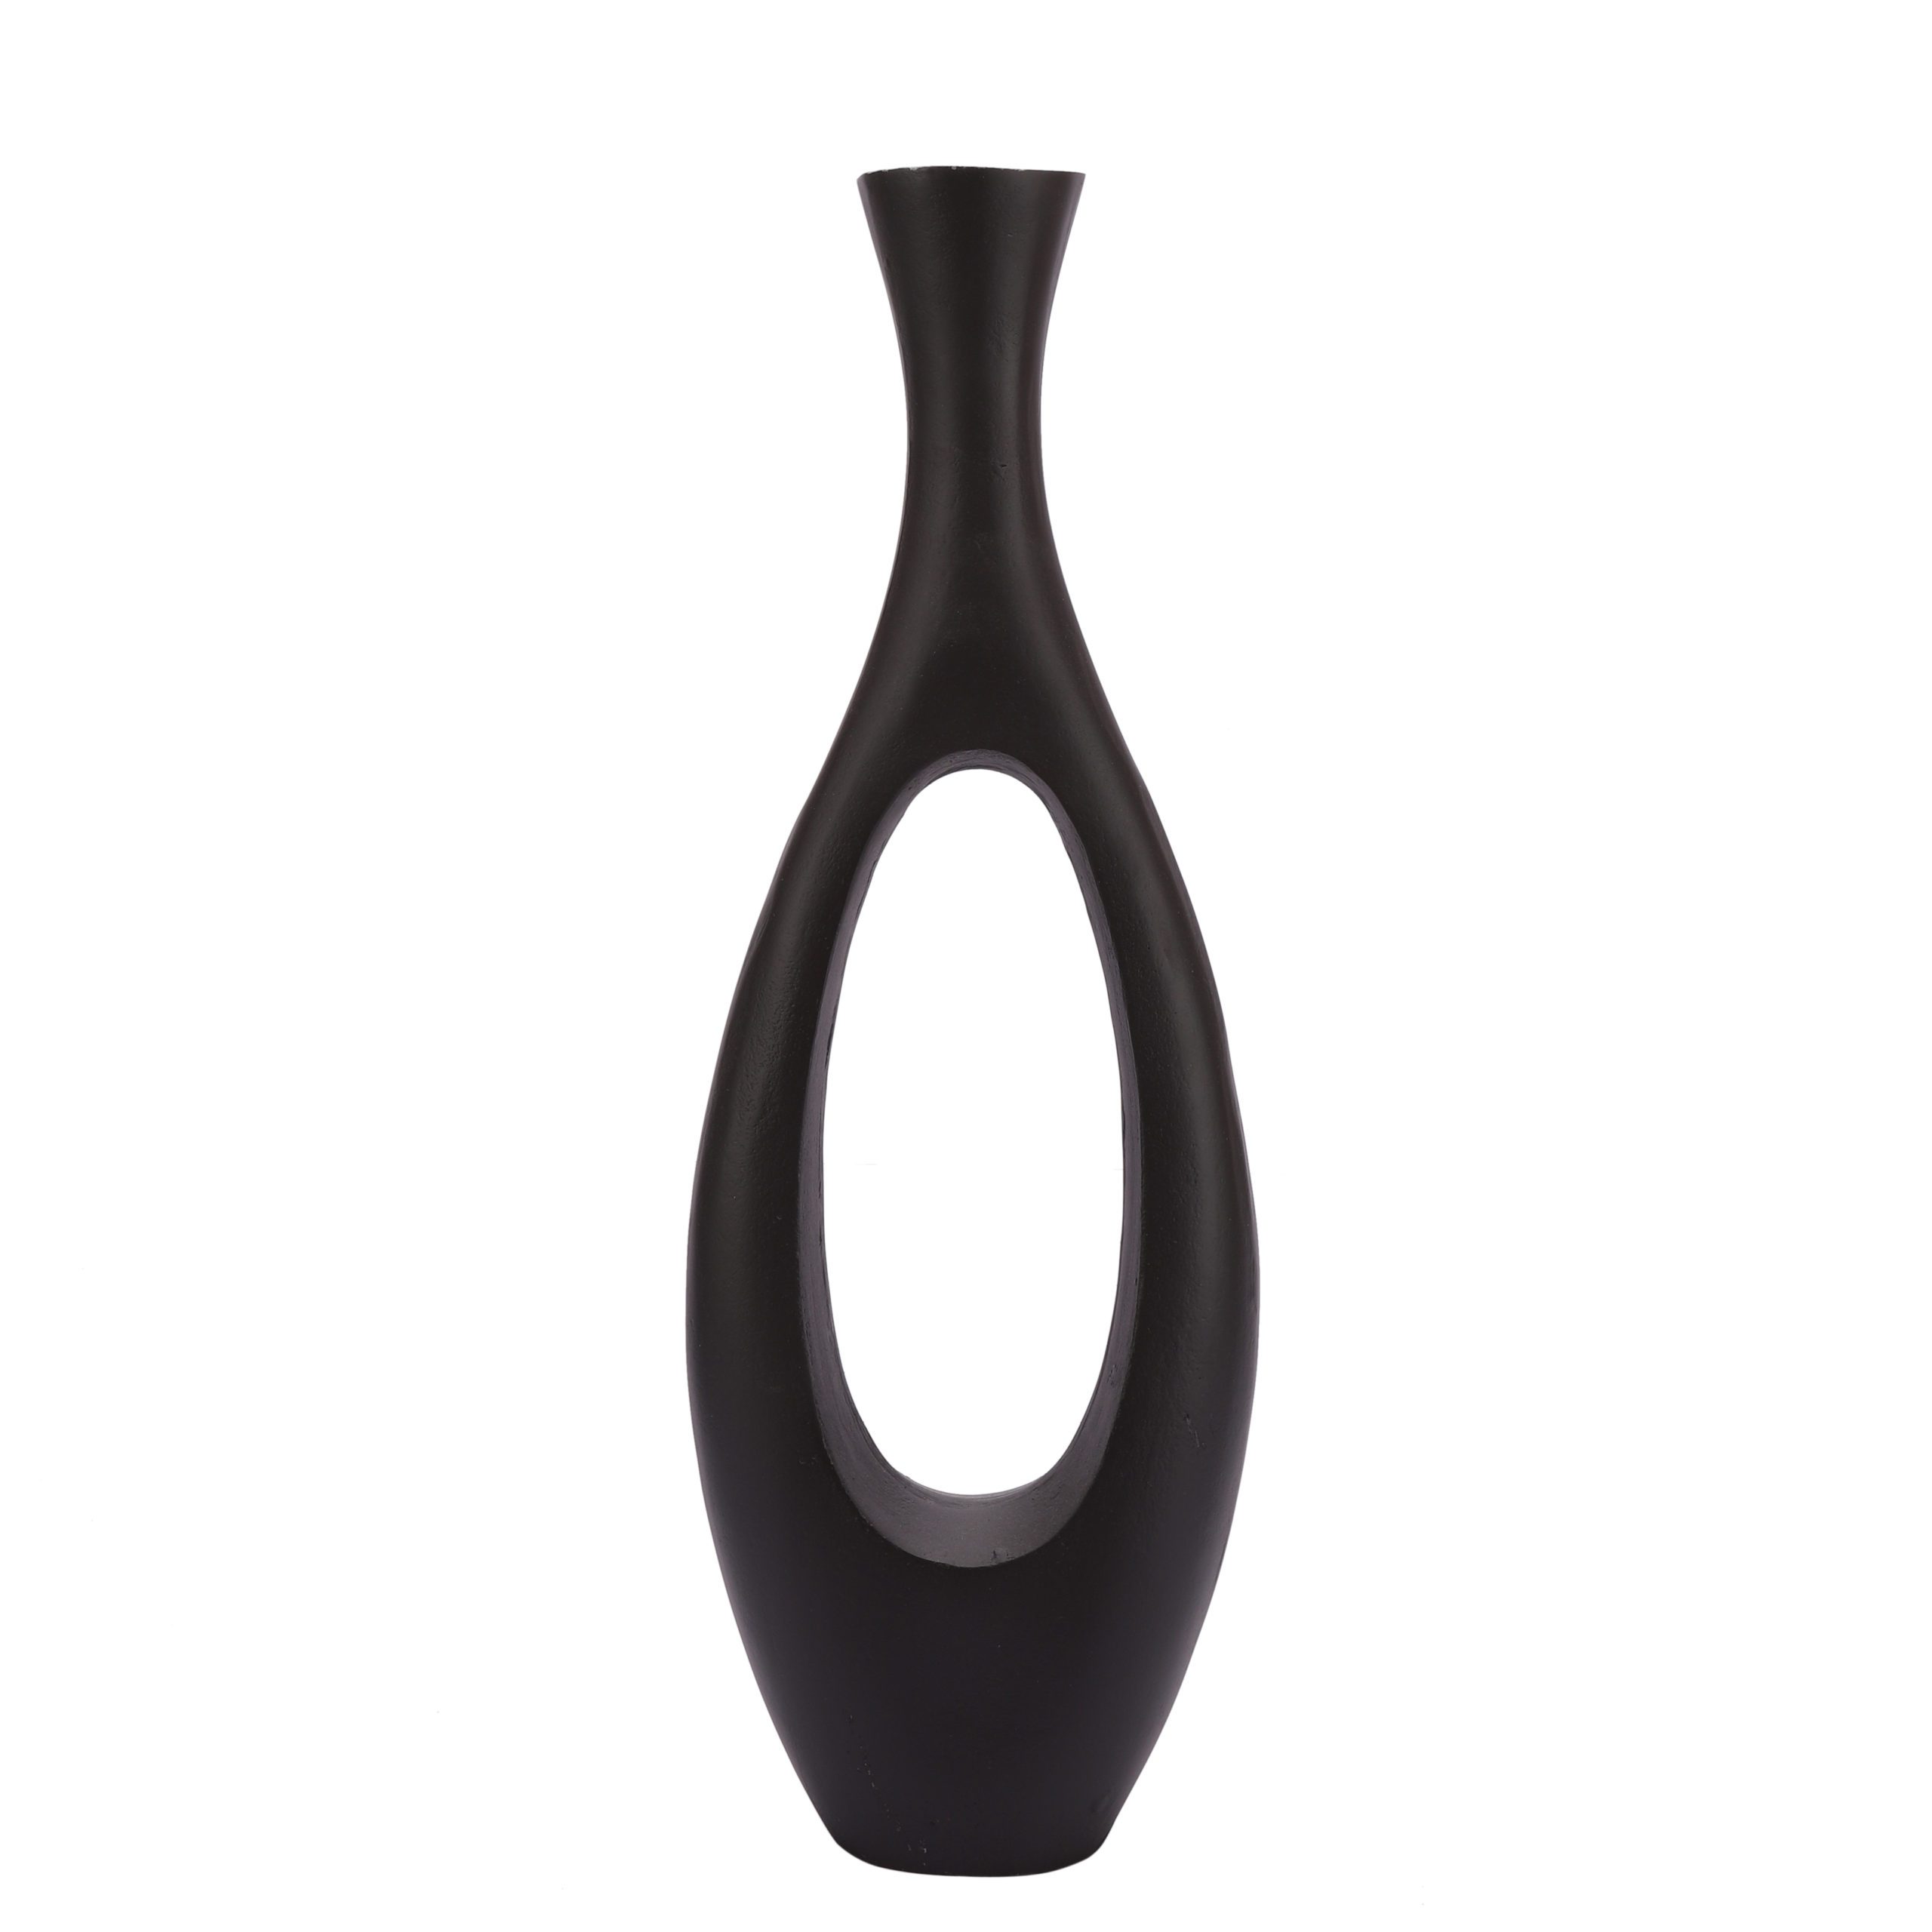 Oblong Vase in Raw Black Finish Small Size - De Maison Decor